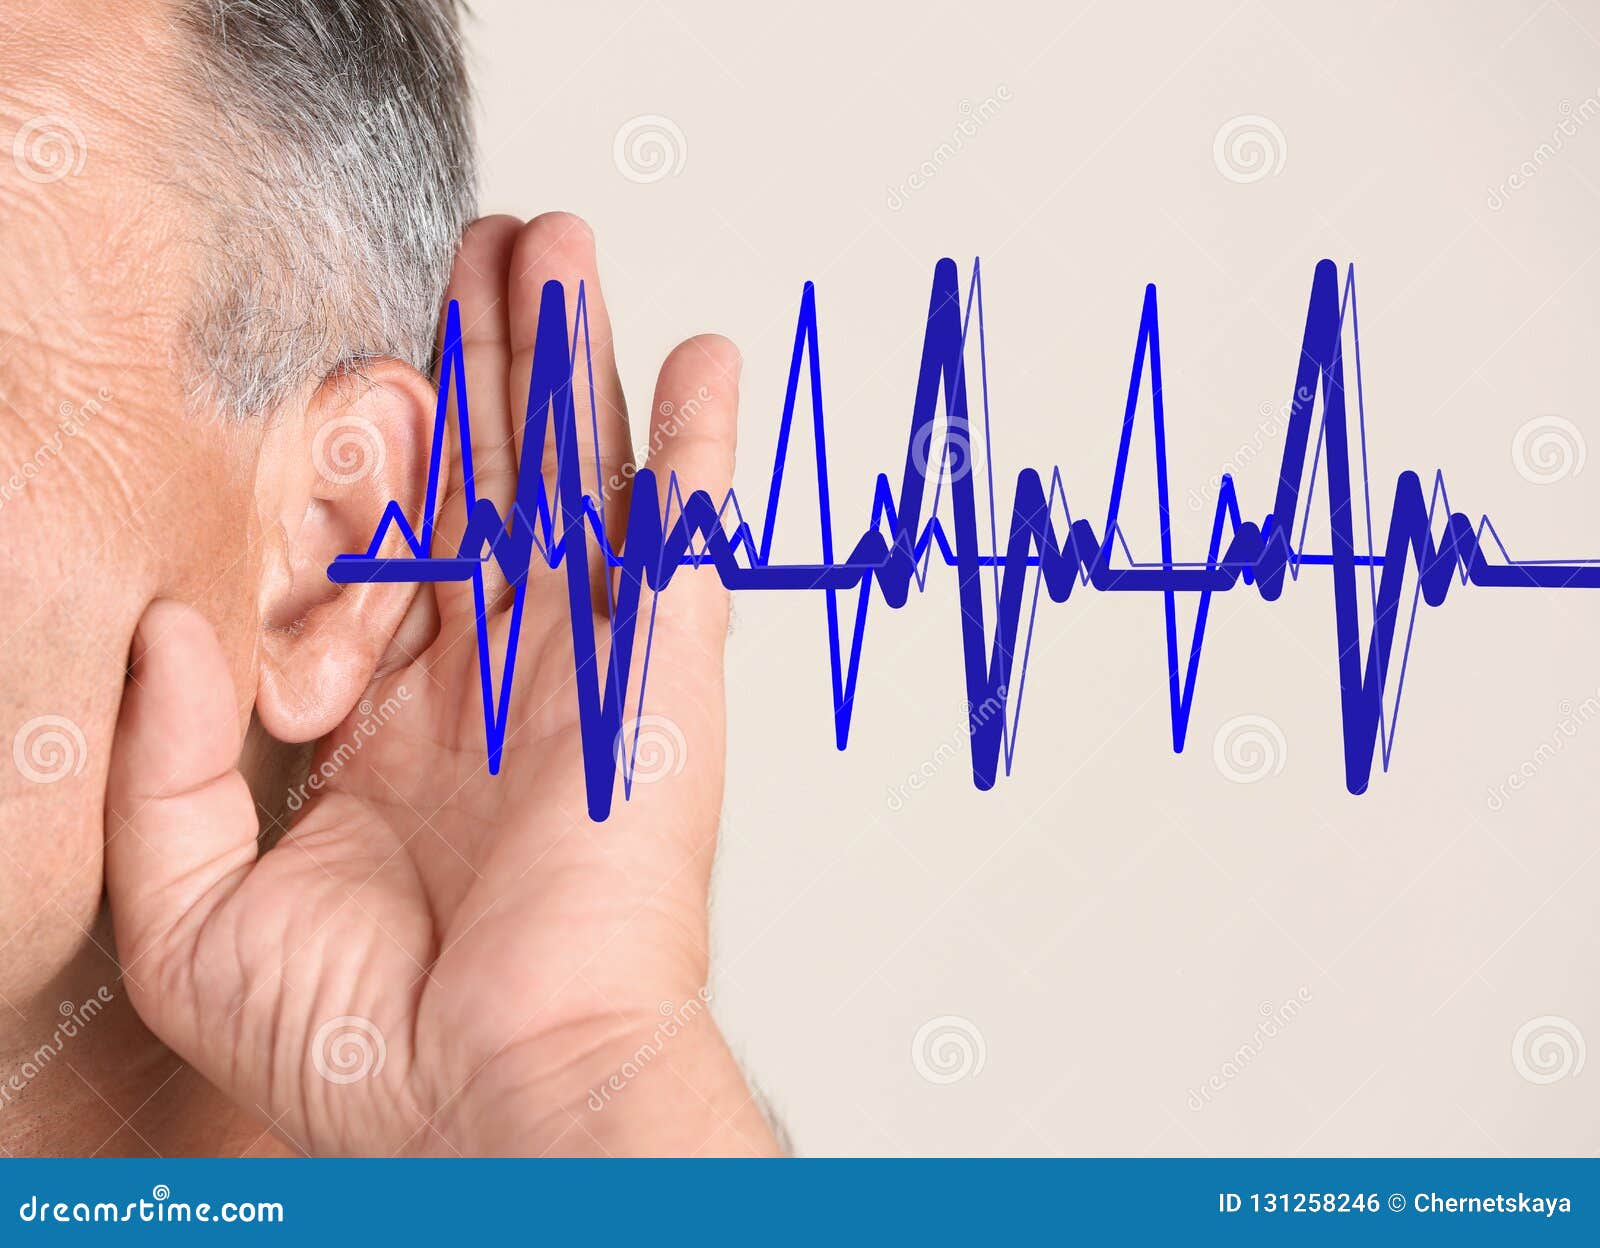 mature man with symptom of hearing loss